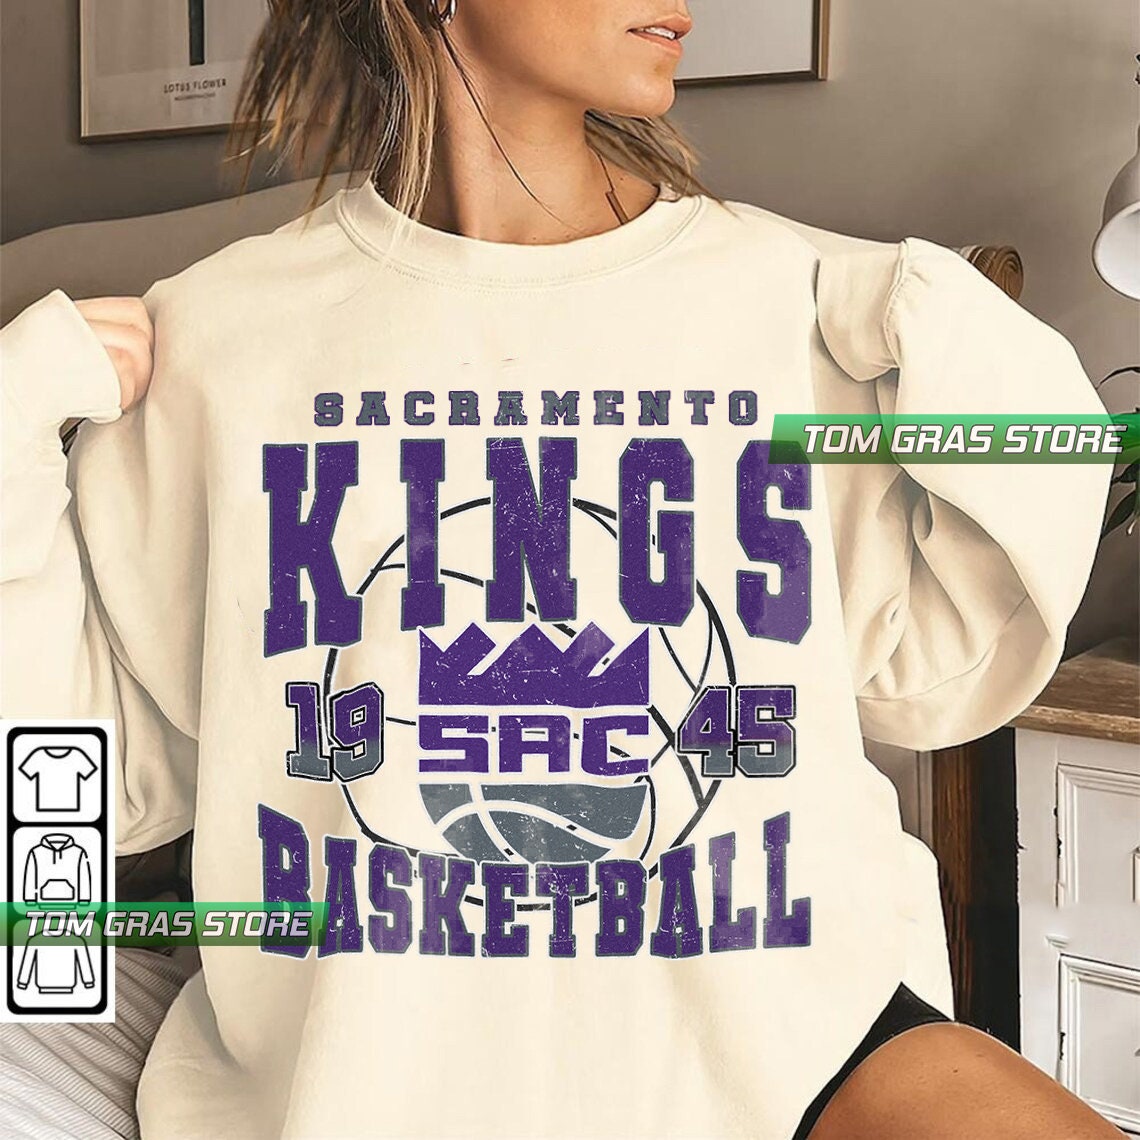 Vintage Sacramento Kings Beam Team Shirt - Shibtee Clothing